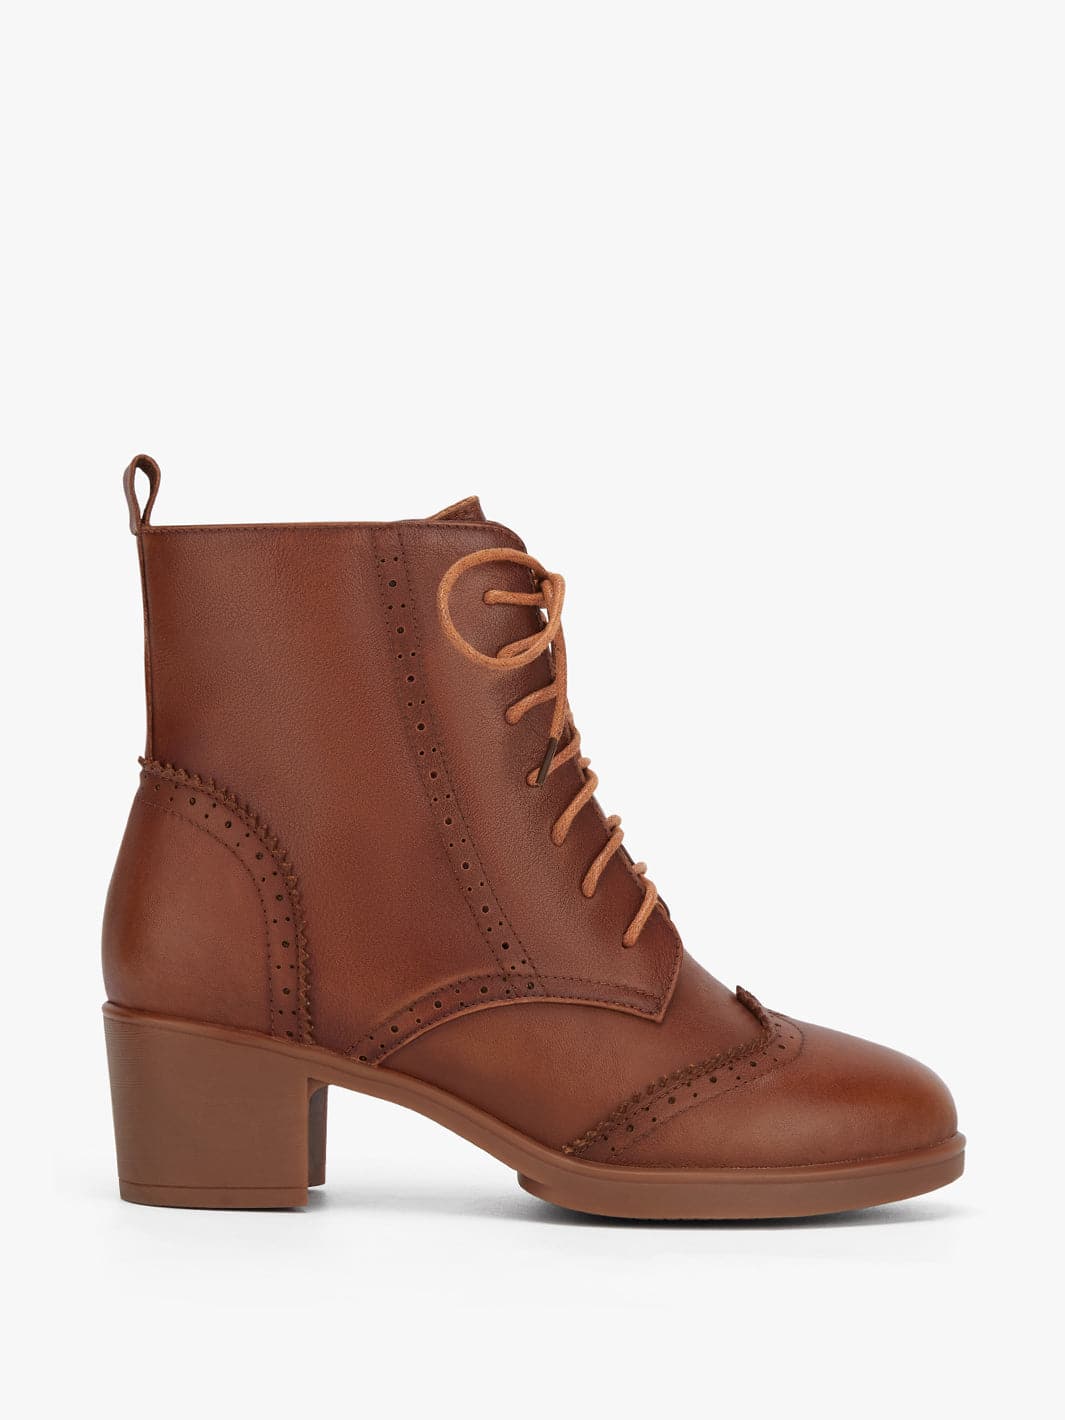 Vintage Martin Boots - Soft Vegan Leather - Heel: 5cm - Zip Closure